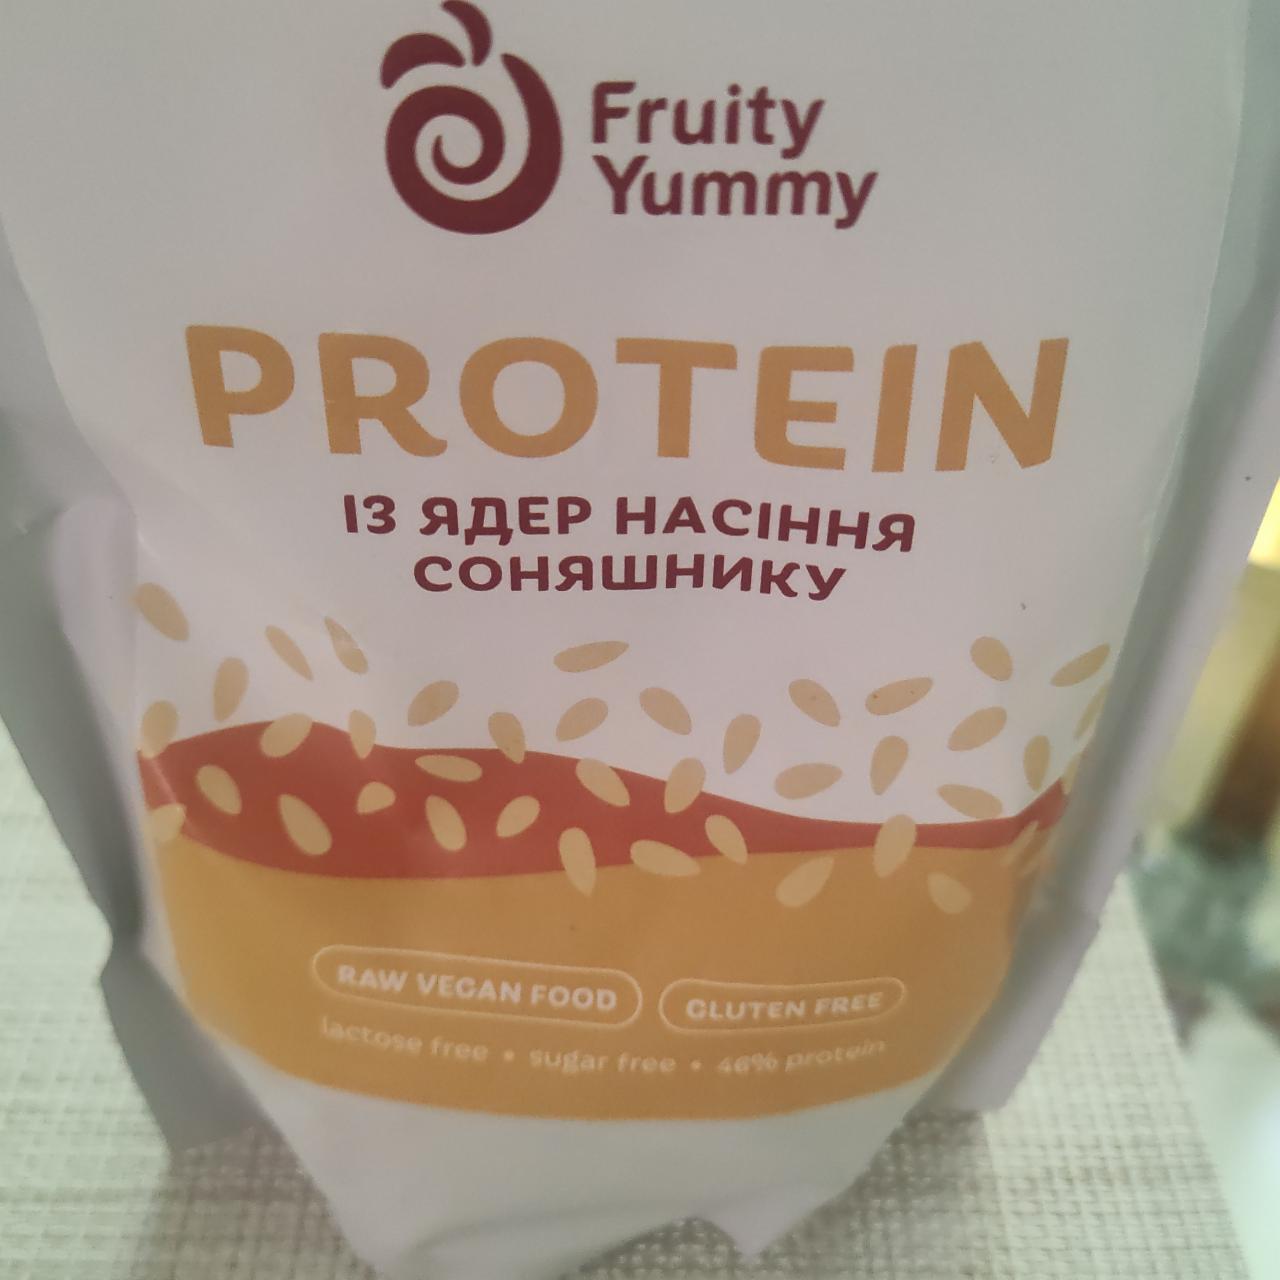 Фото - Протеин из семян подсолнечника Fruity Yummy